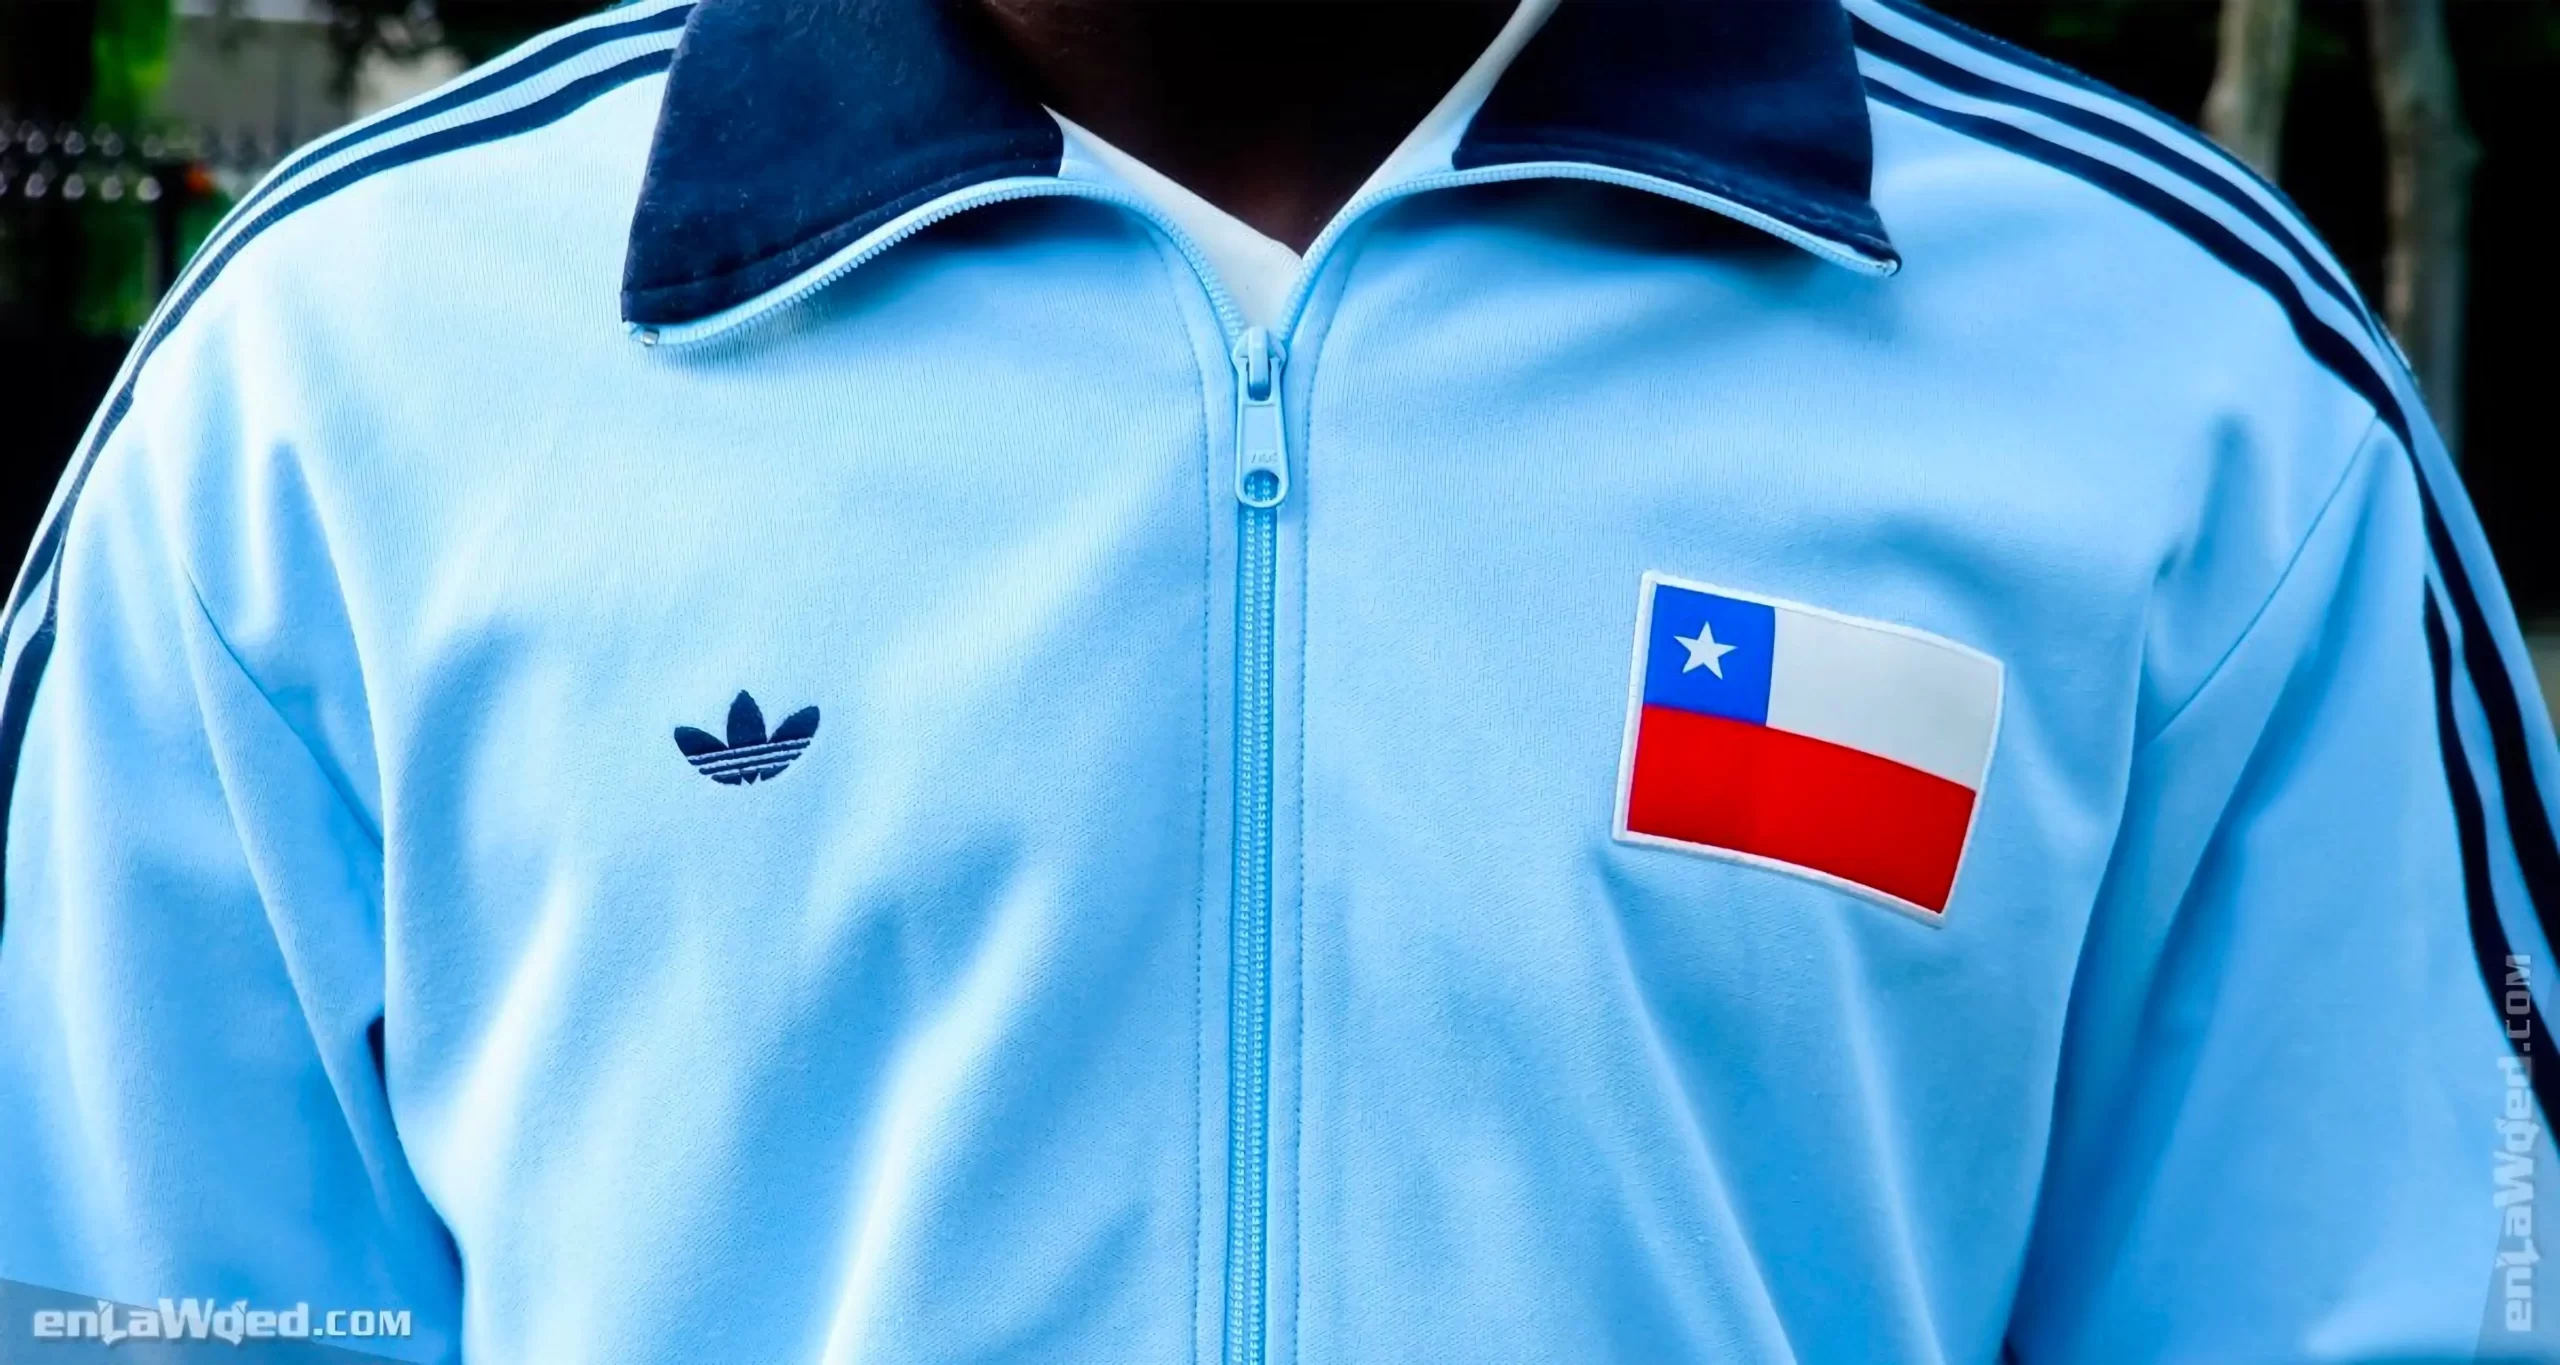 Men’s 2003 Chile ’82 Soto TT by Adidas Originals: Fascinating (EnLawded.com file #lmc4ibvi43jq2ndh3nz)